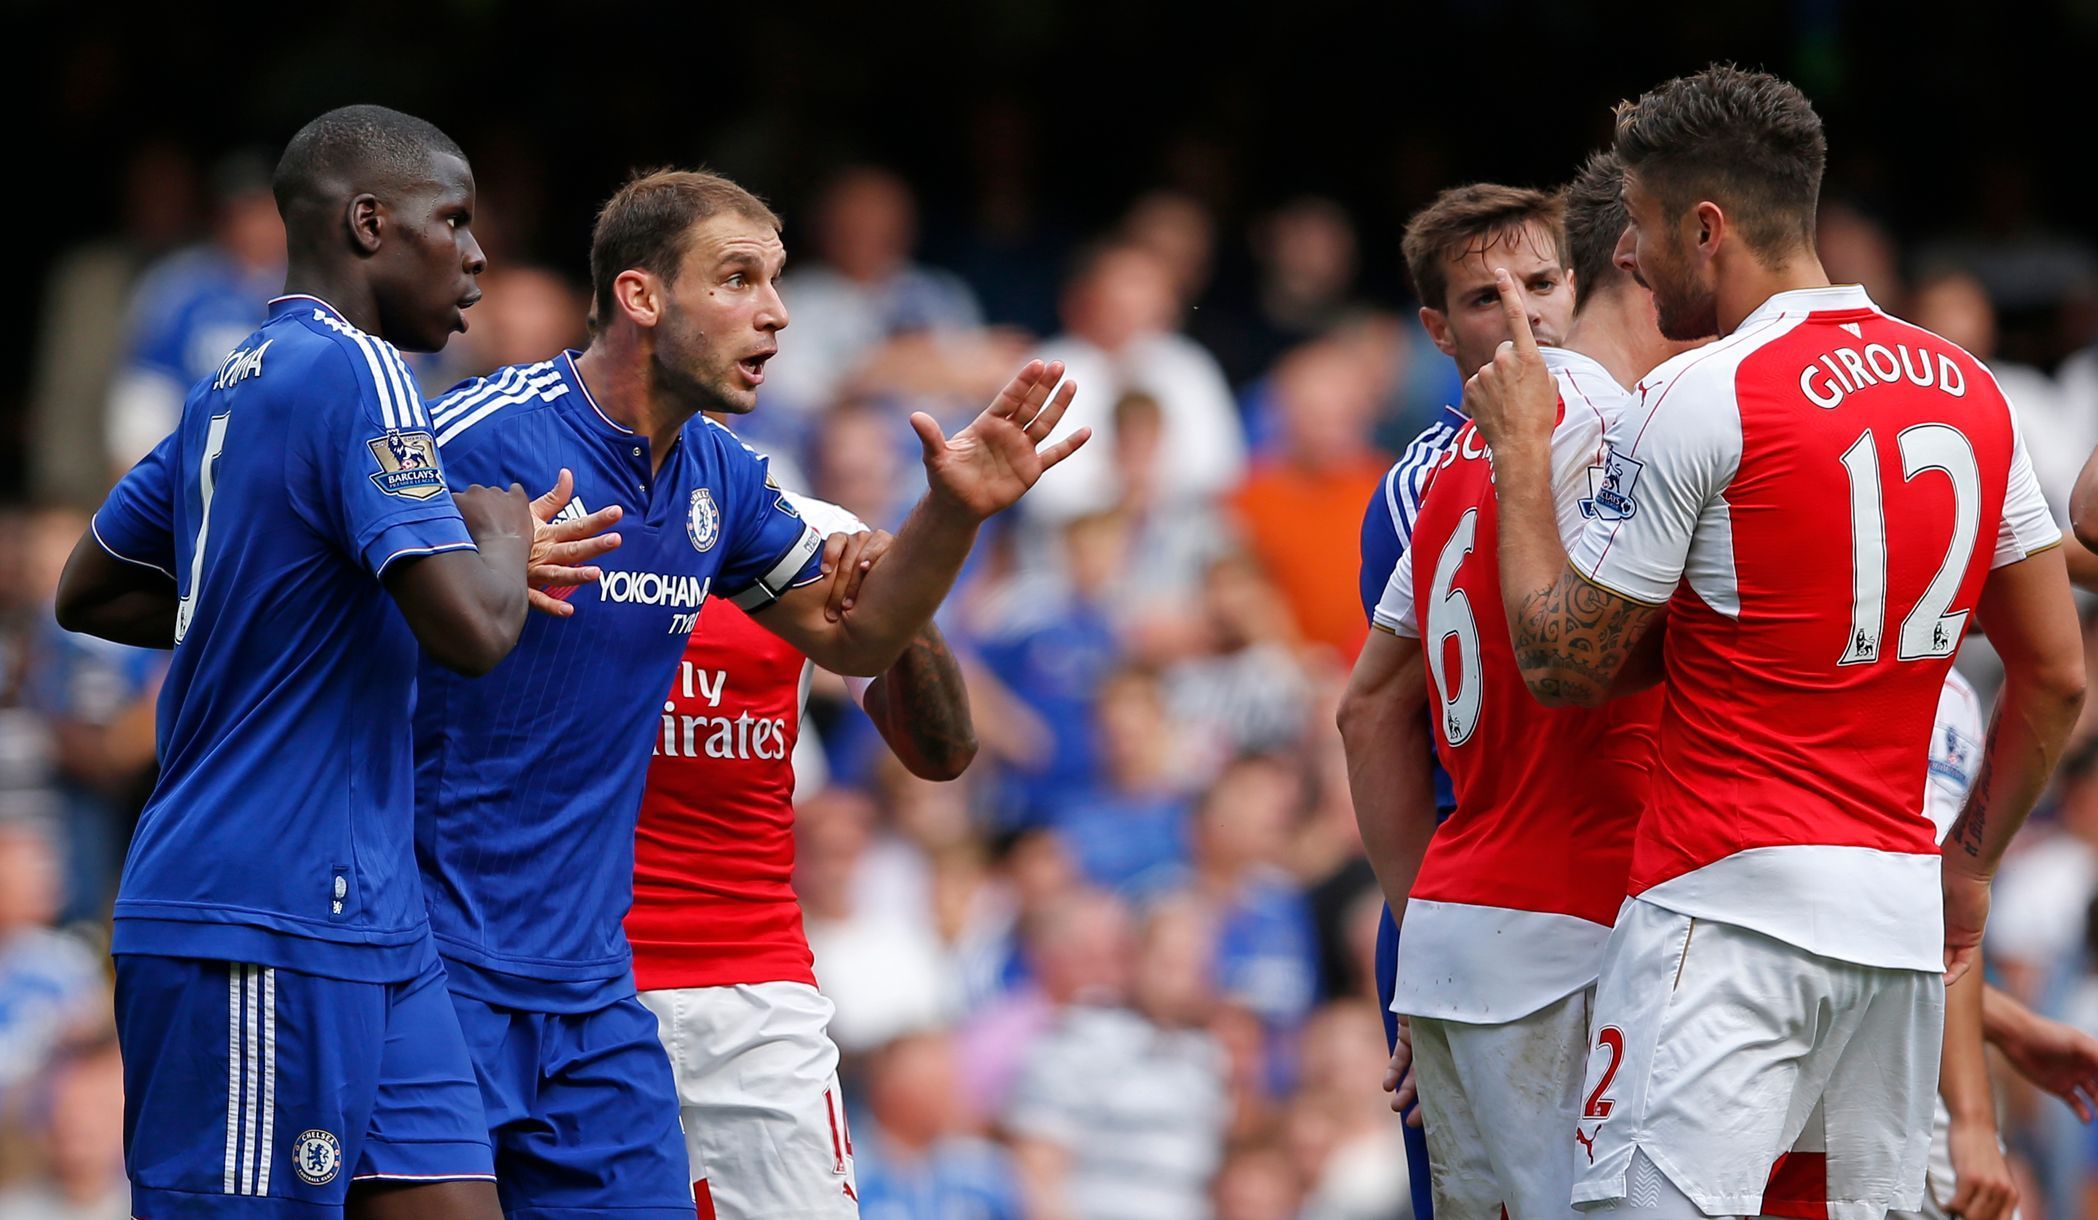 Chelsea's Branislav Ivanovic remonstrates with Arsenal's Olivier Giroud